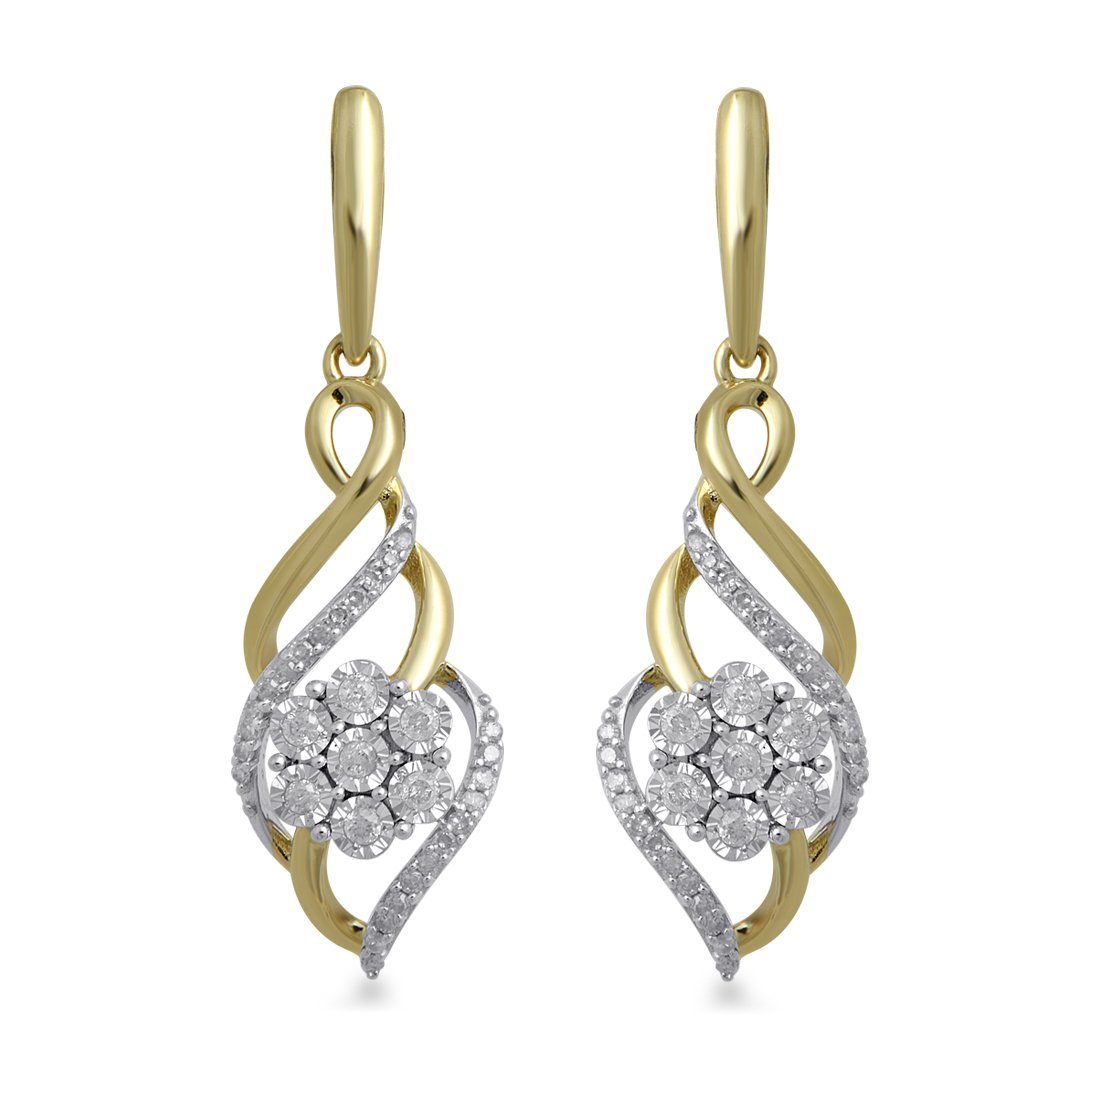 Bevilles Fancy Swirl Flower Drop Earrings with 1/4ct of Diamonds in 9ct Yellow Gold